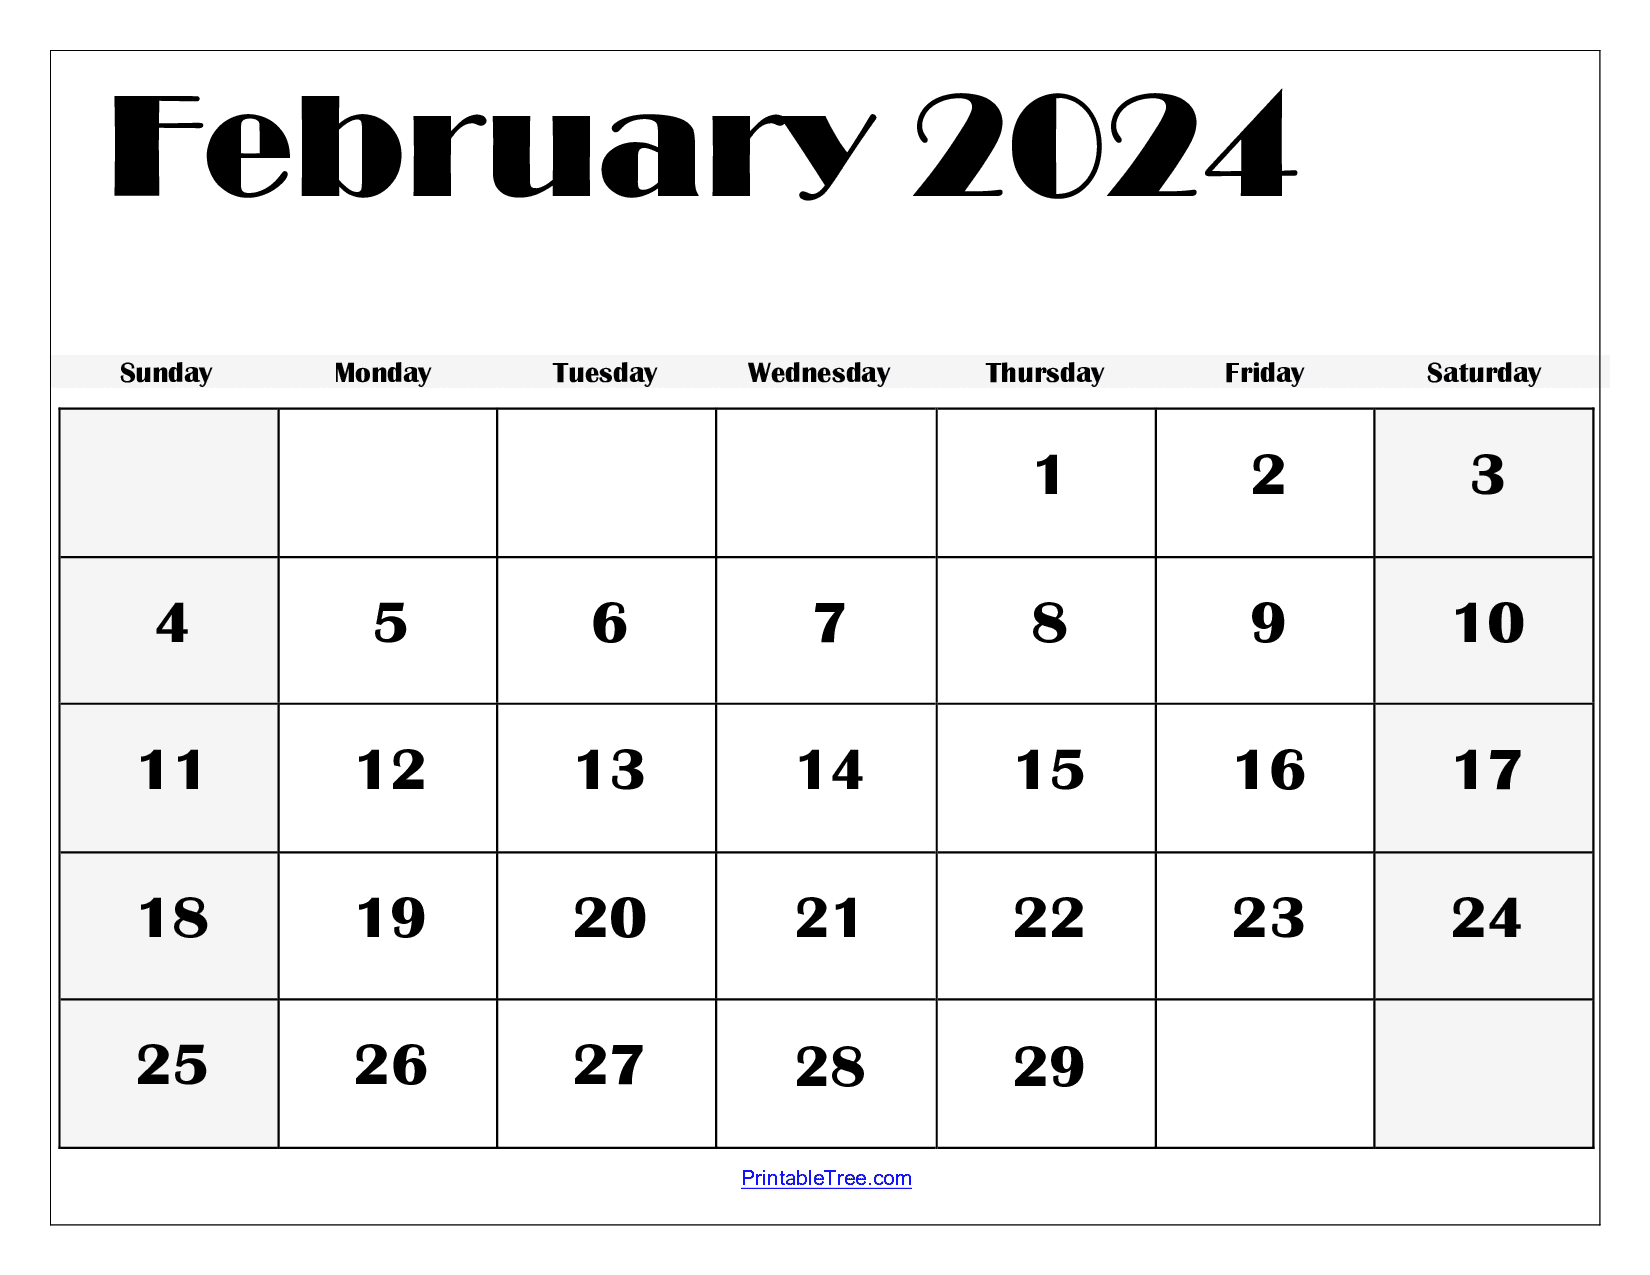 February 2024 Calendar Printable Pdf Template With Holidays for Month Of February 2024 Printable Calendar